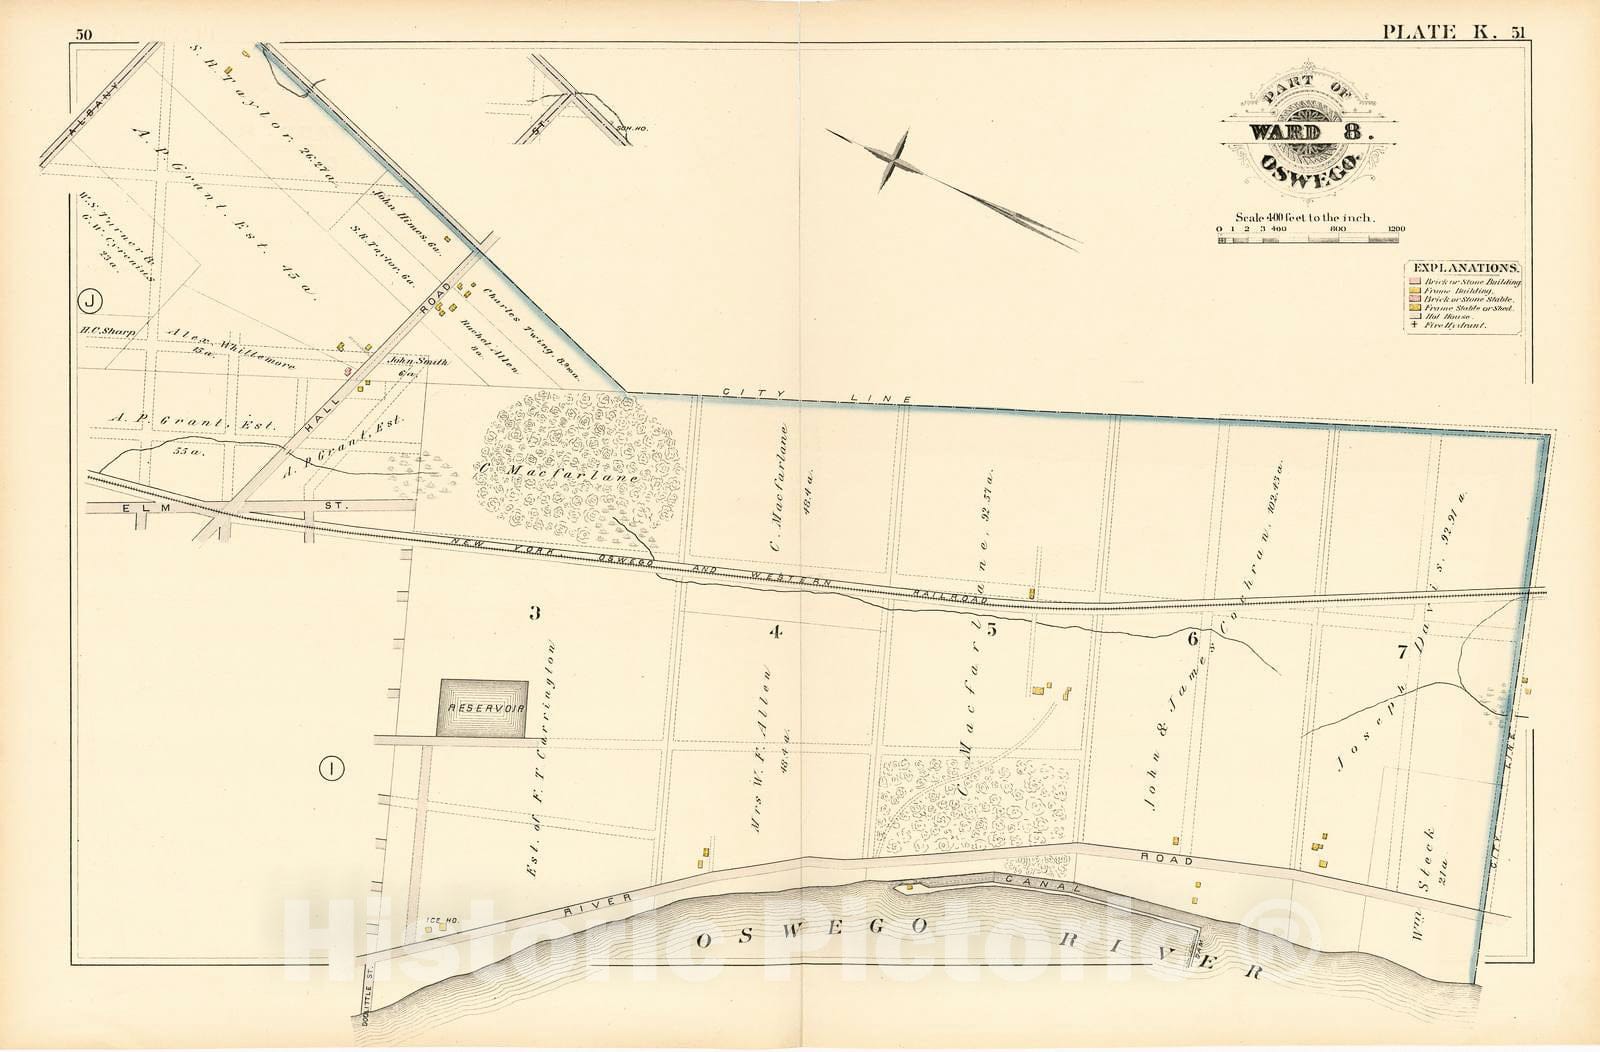 Historic 1880 Map - City Atlas of Oswego, New York - Part of Ward 8. Oswego. Plate K. - Atlas of The City of Oswego N.Y.